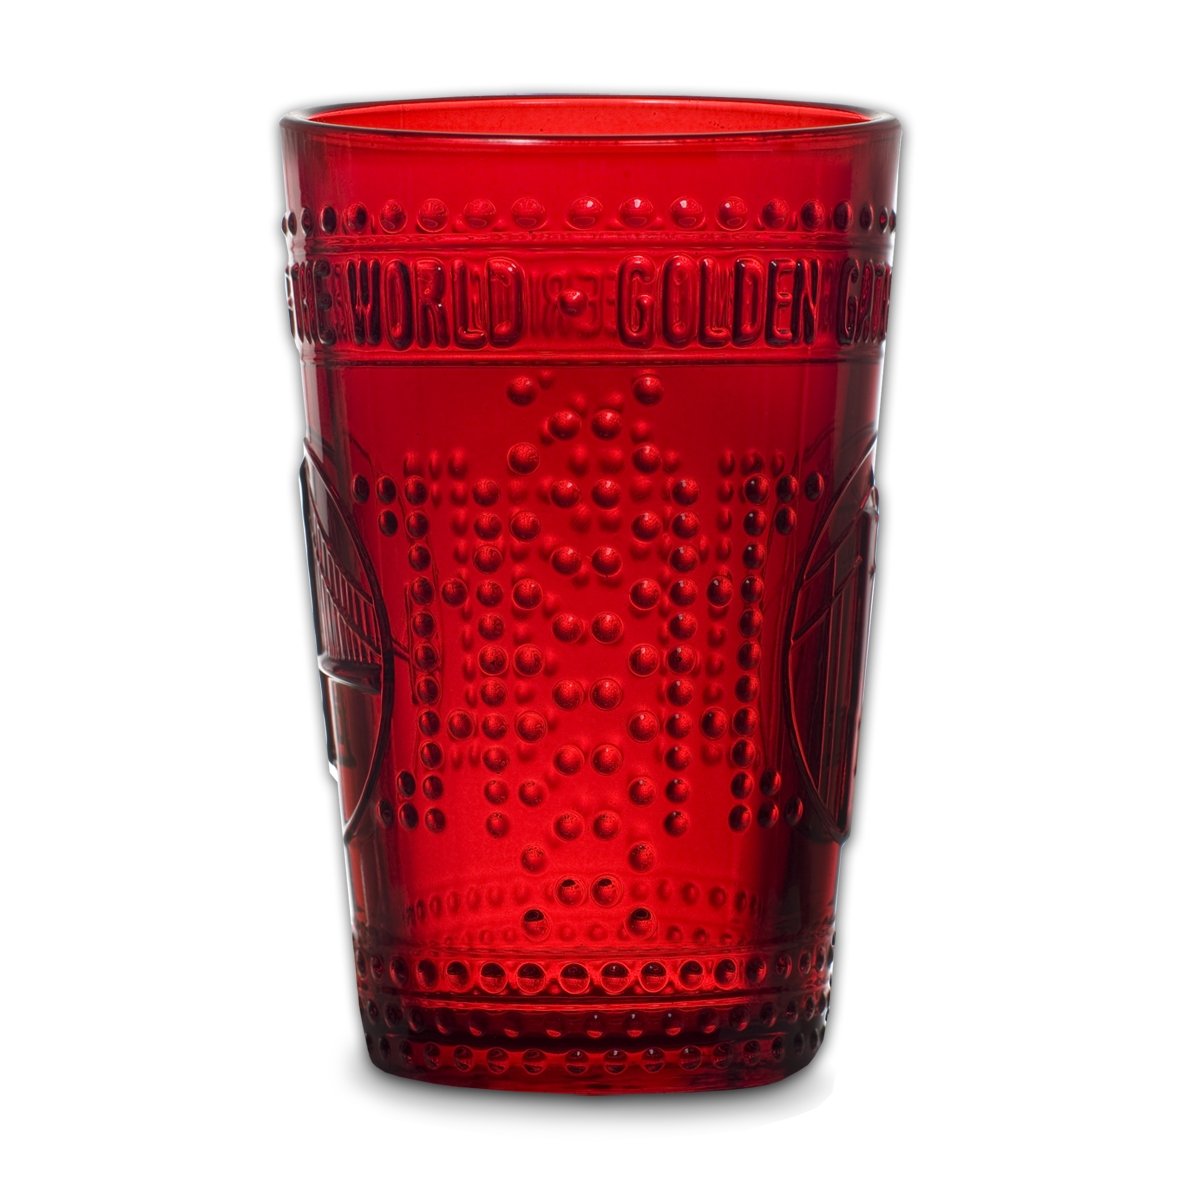 Red Golden Gate Bridge drinking glass with textured bridge and rivet design motif. 